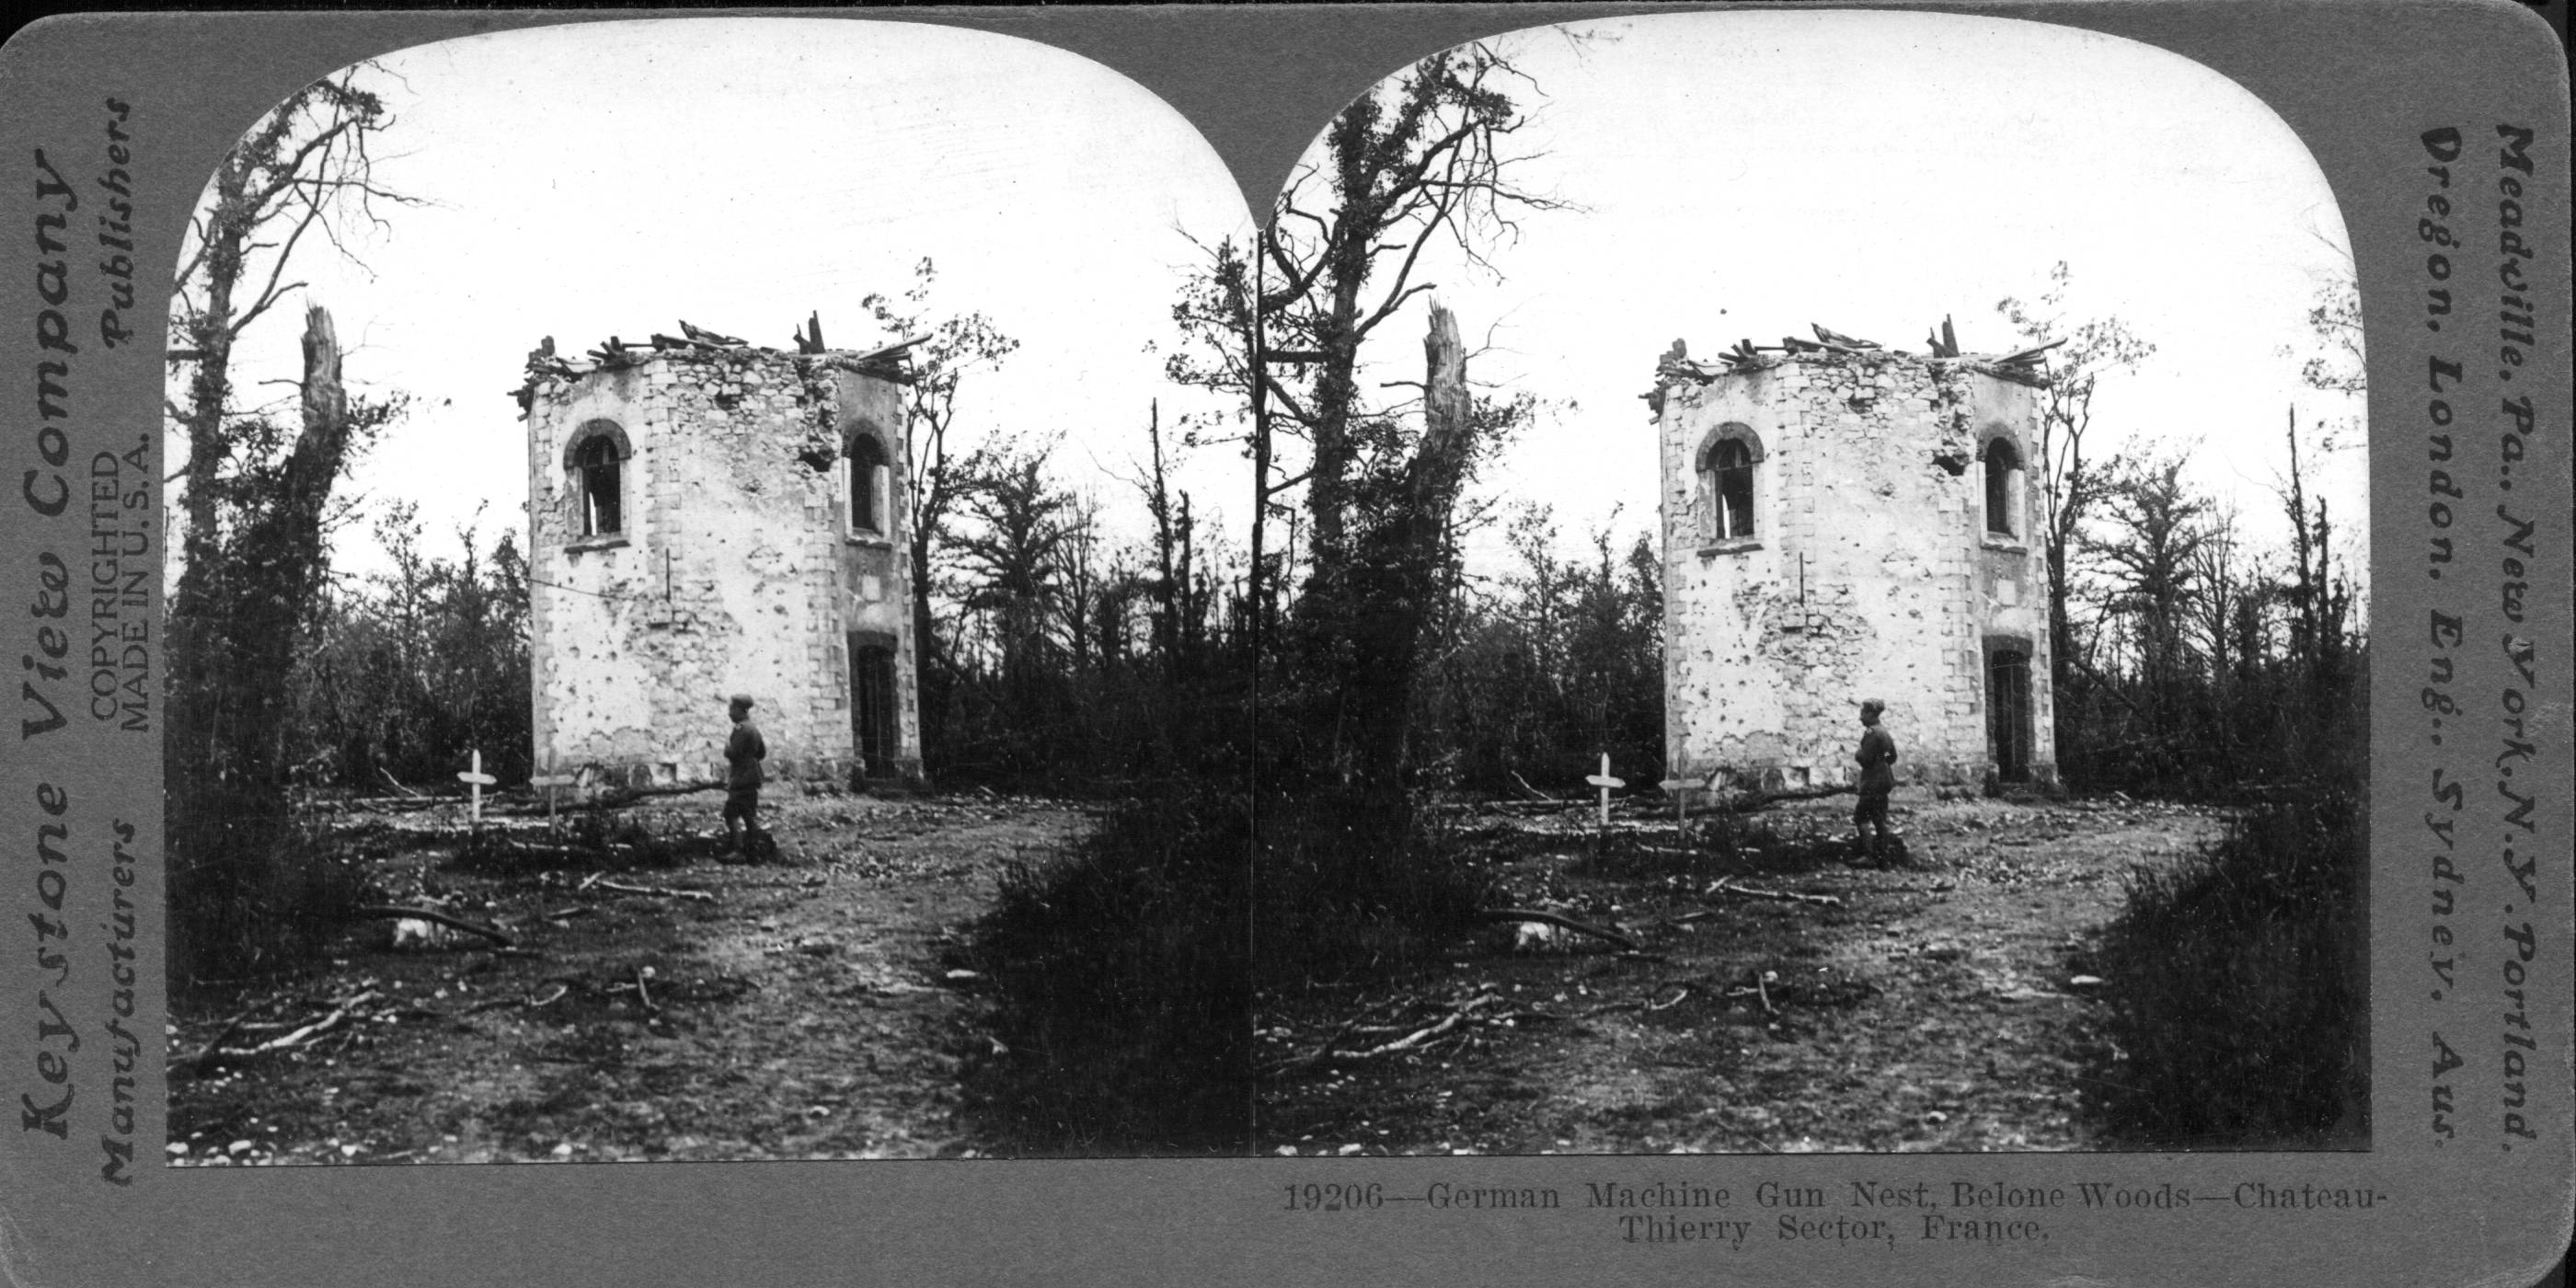 German Machine Gun Nest, Belone Woods--Chateau-Thierry Sector, France